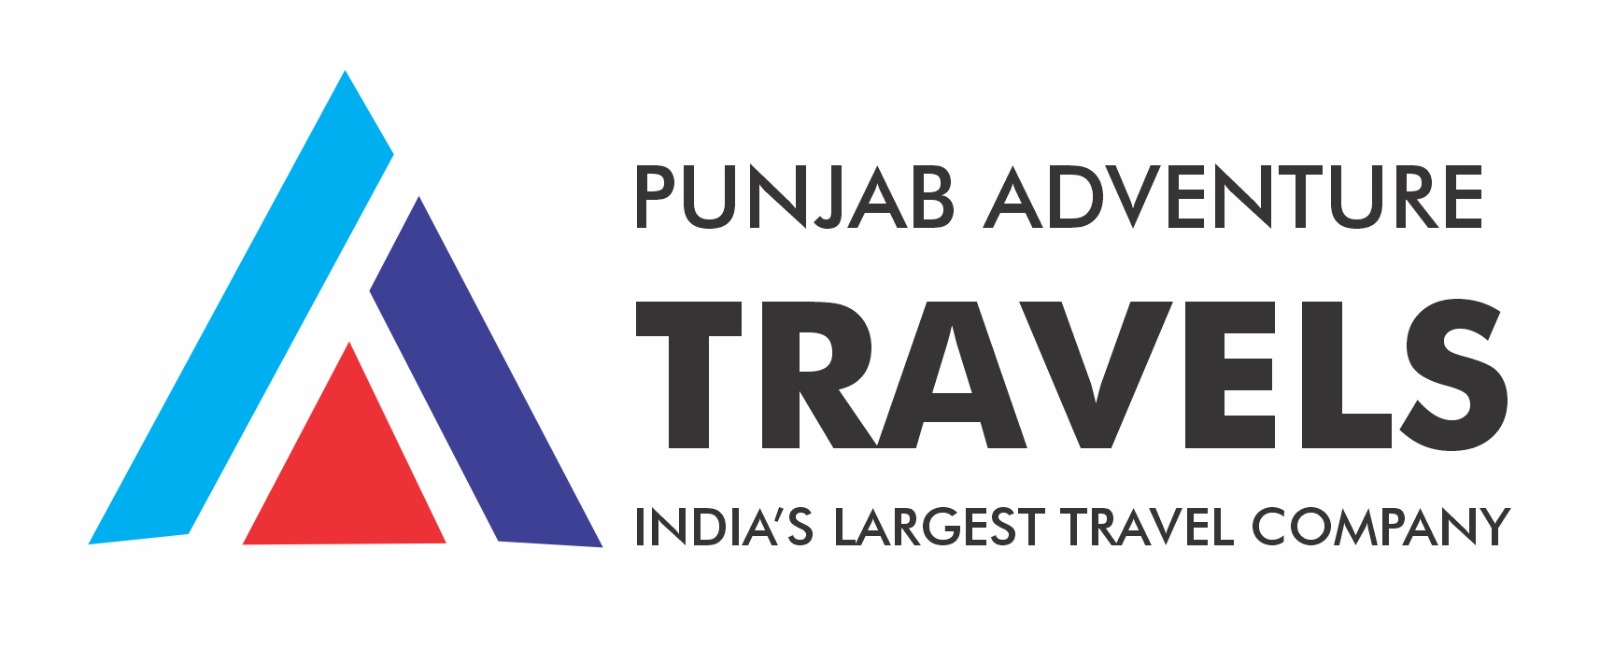 Punjab Adventure Travels Pvt Ltd Company